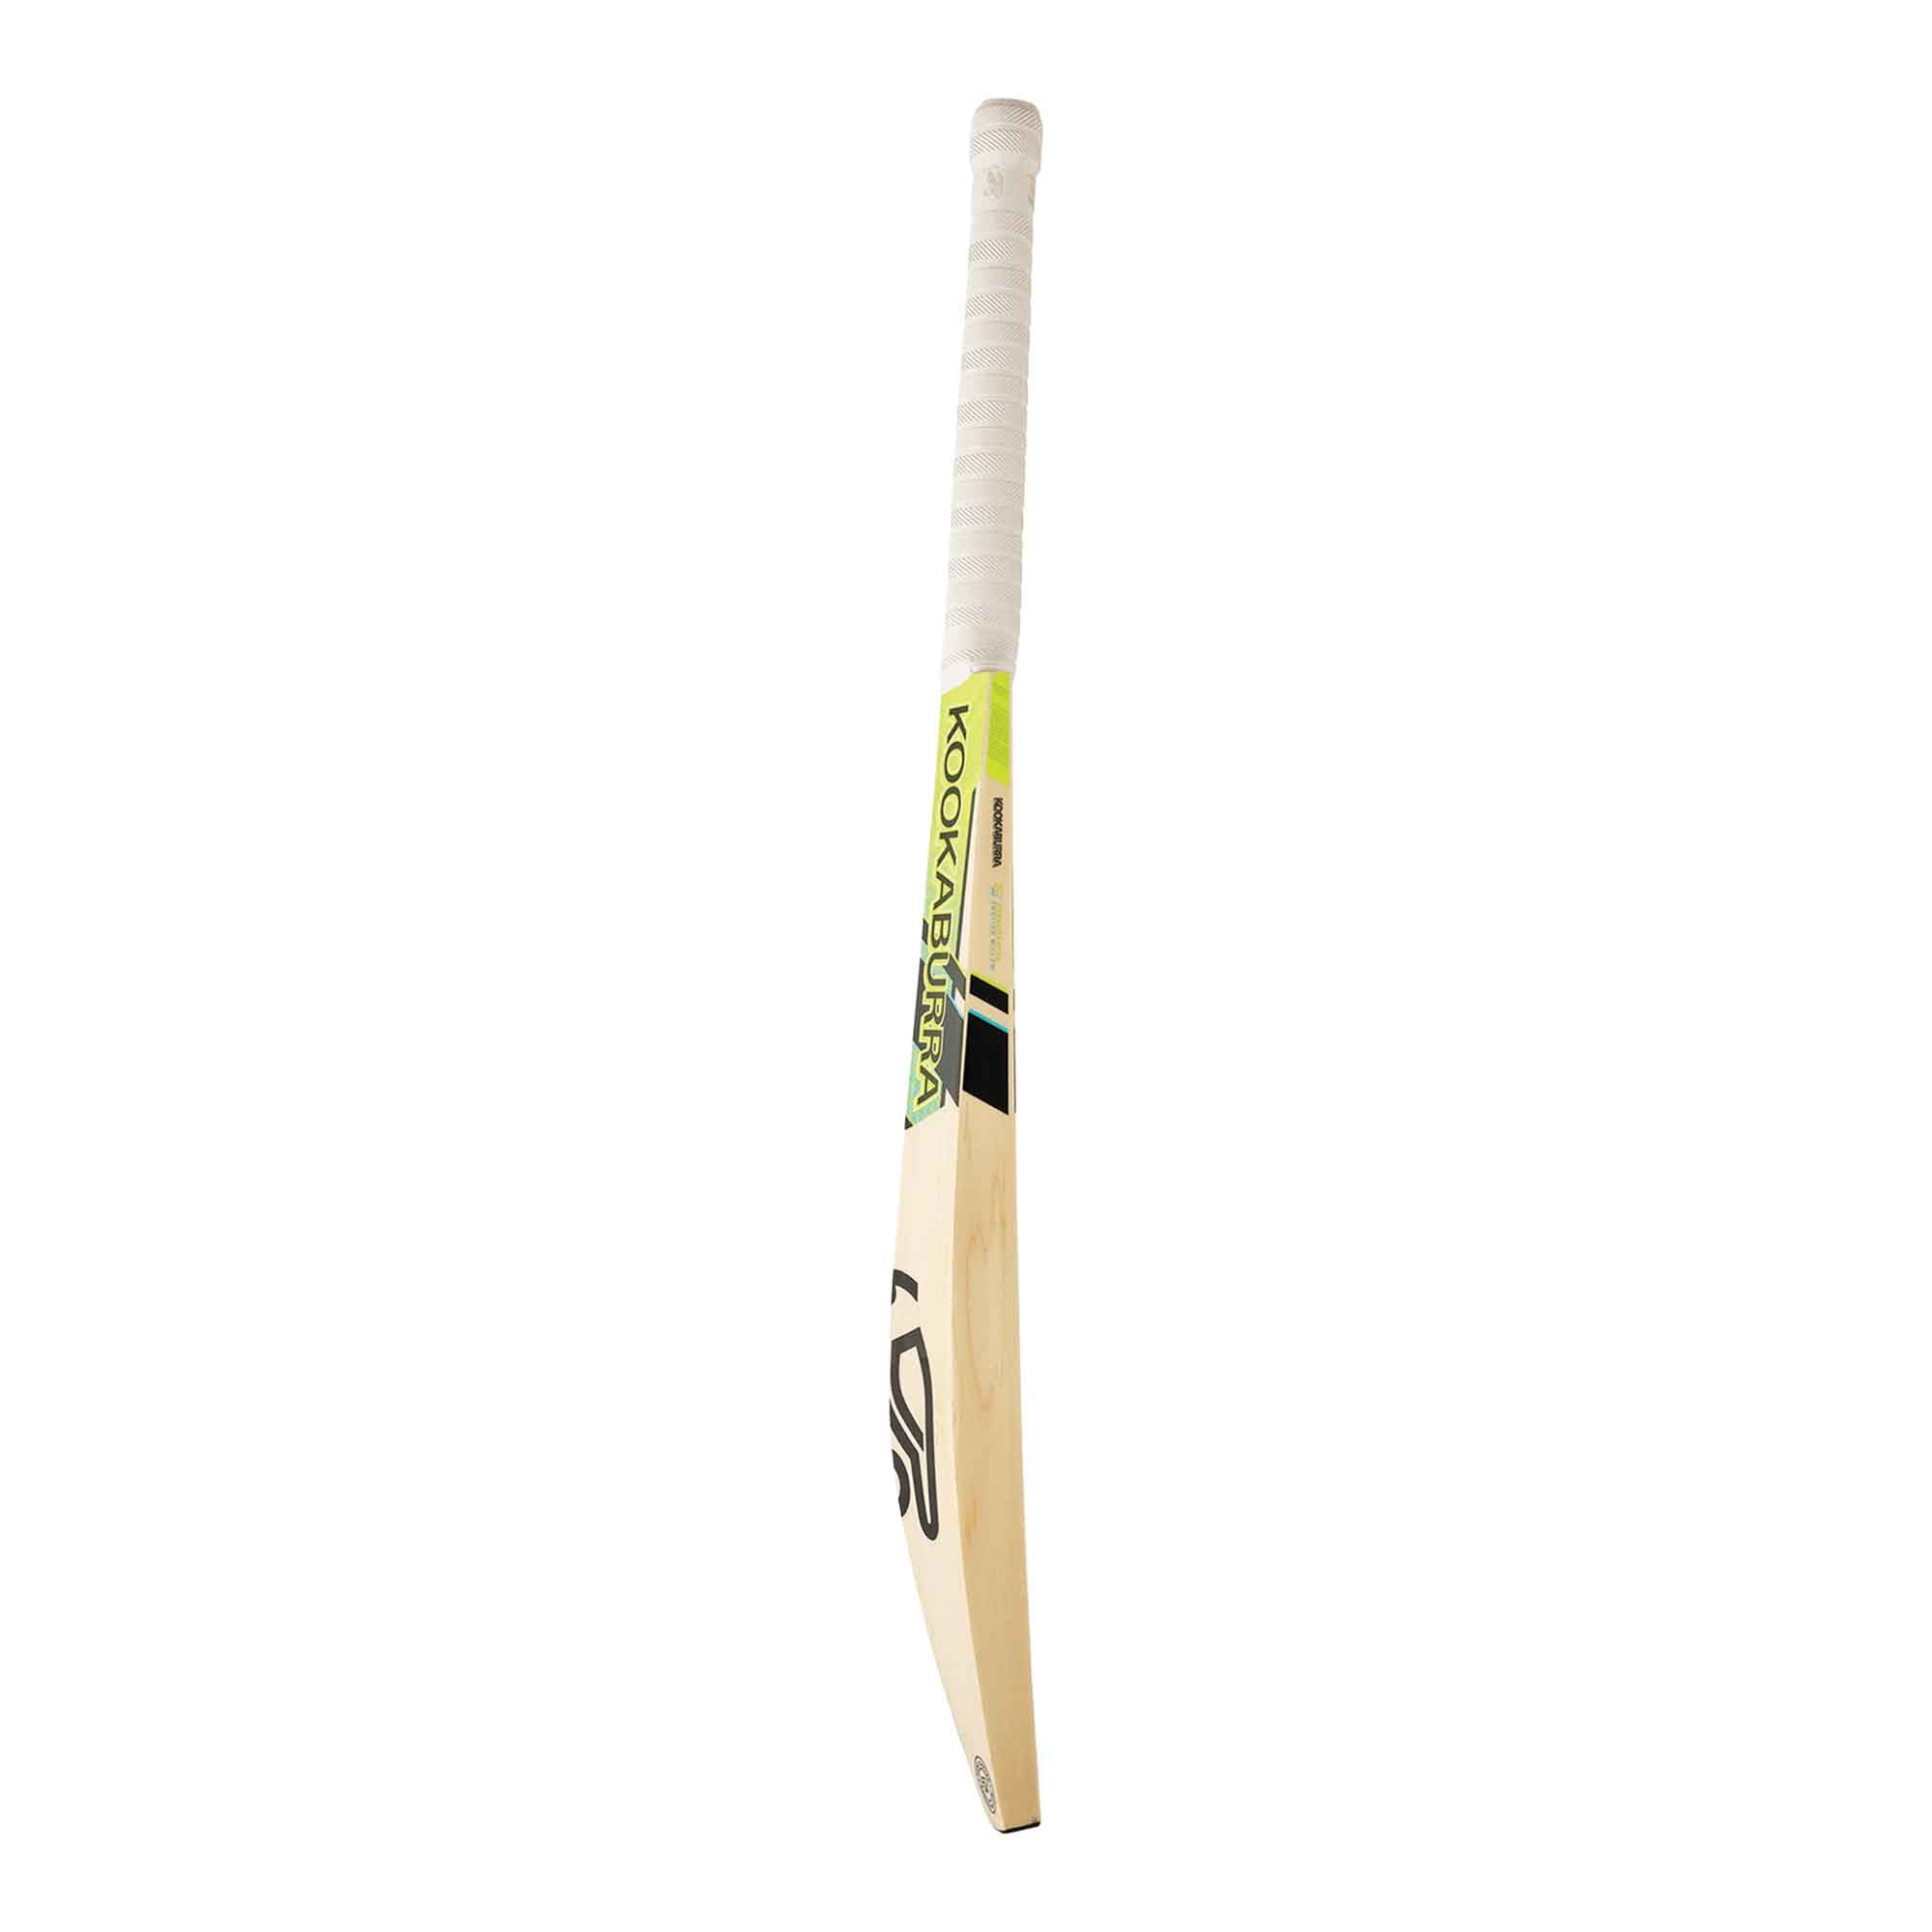 Kookaburra Rapid Pro 2.0 English Willow Cricket Bat